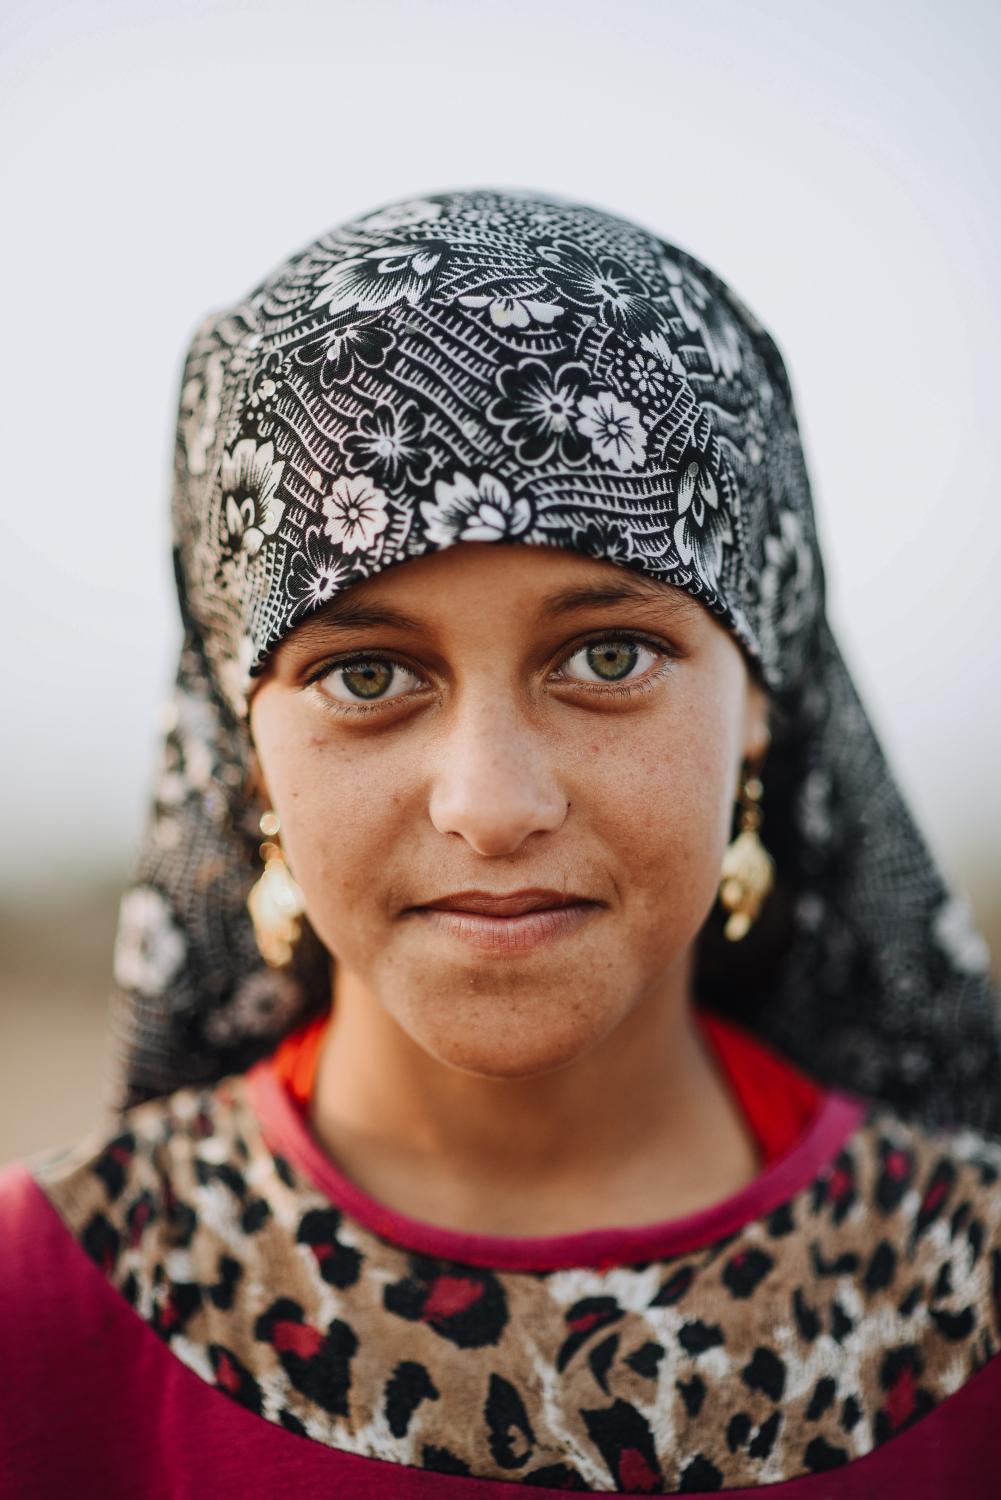 Portraits - Yasmine, an Egyptian girl from the city of Ismailia 2016